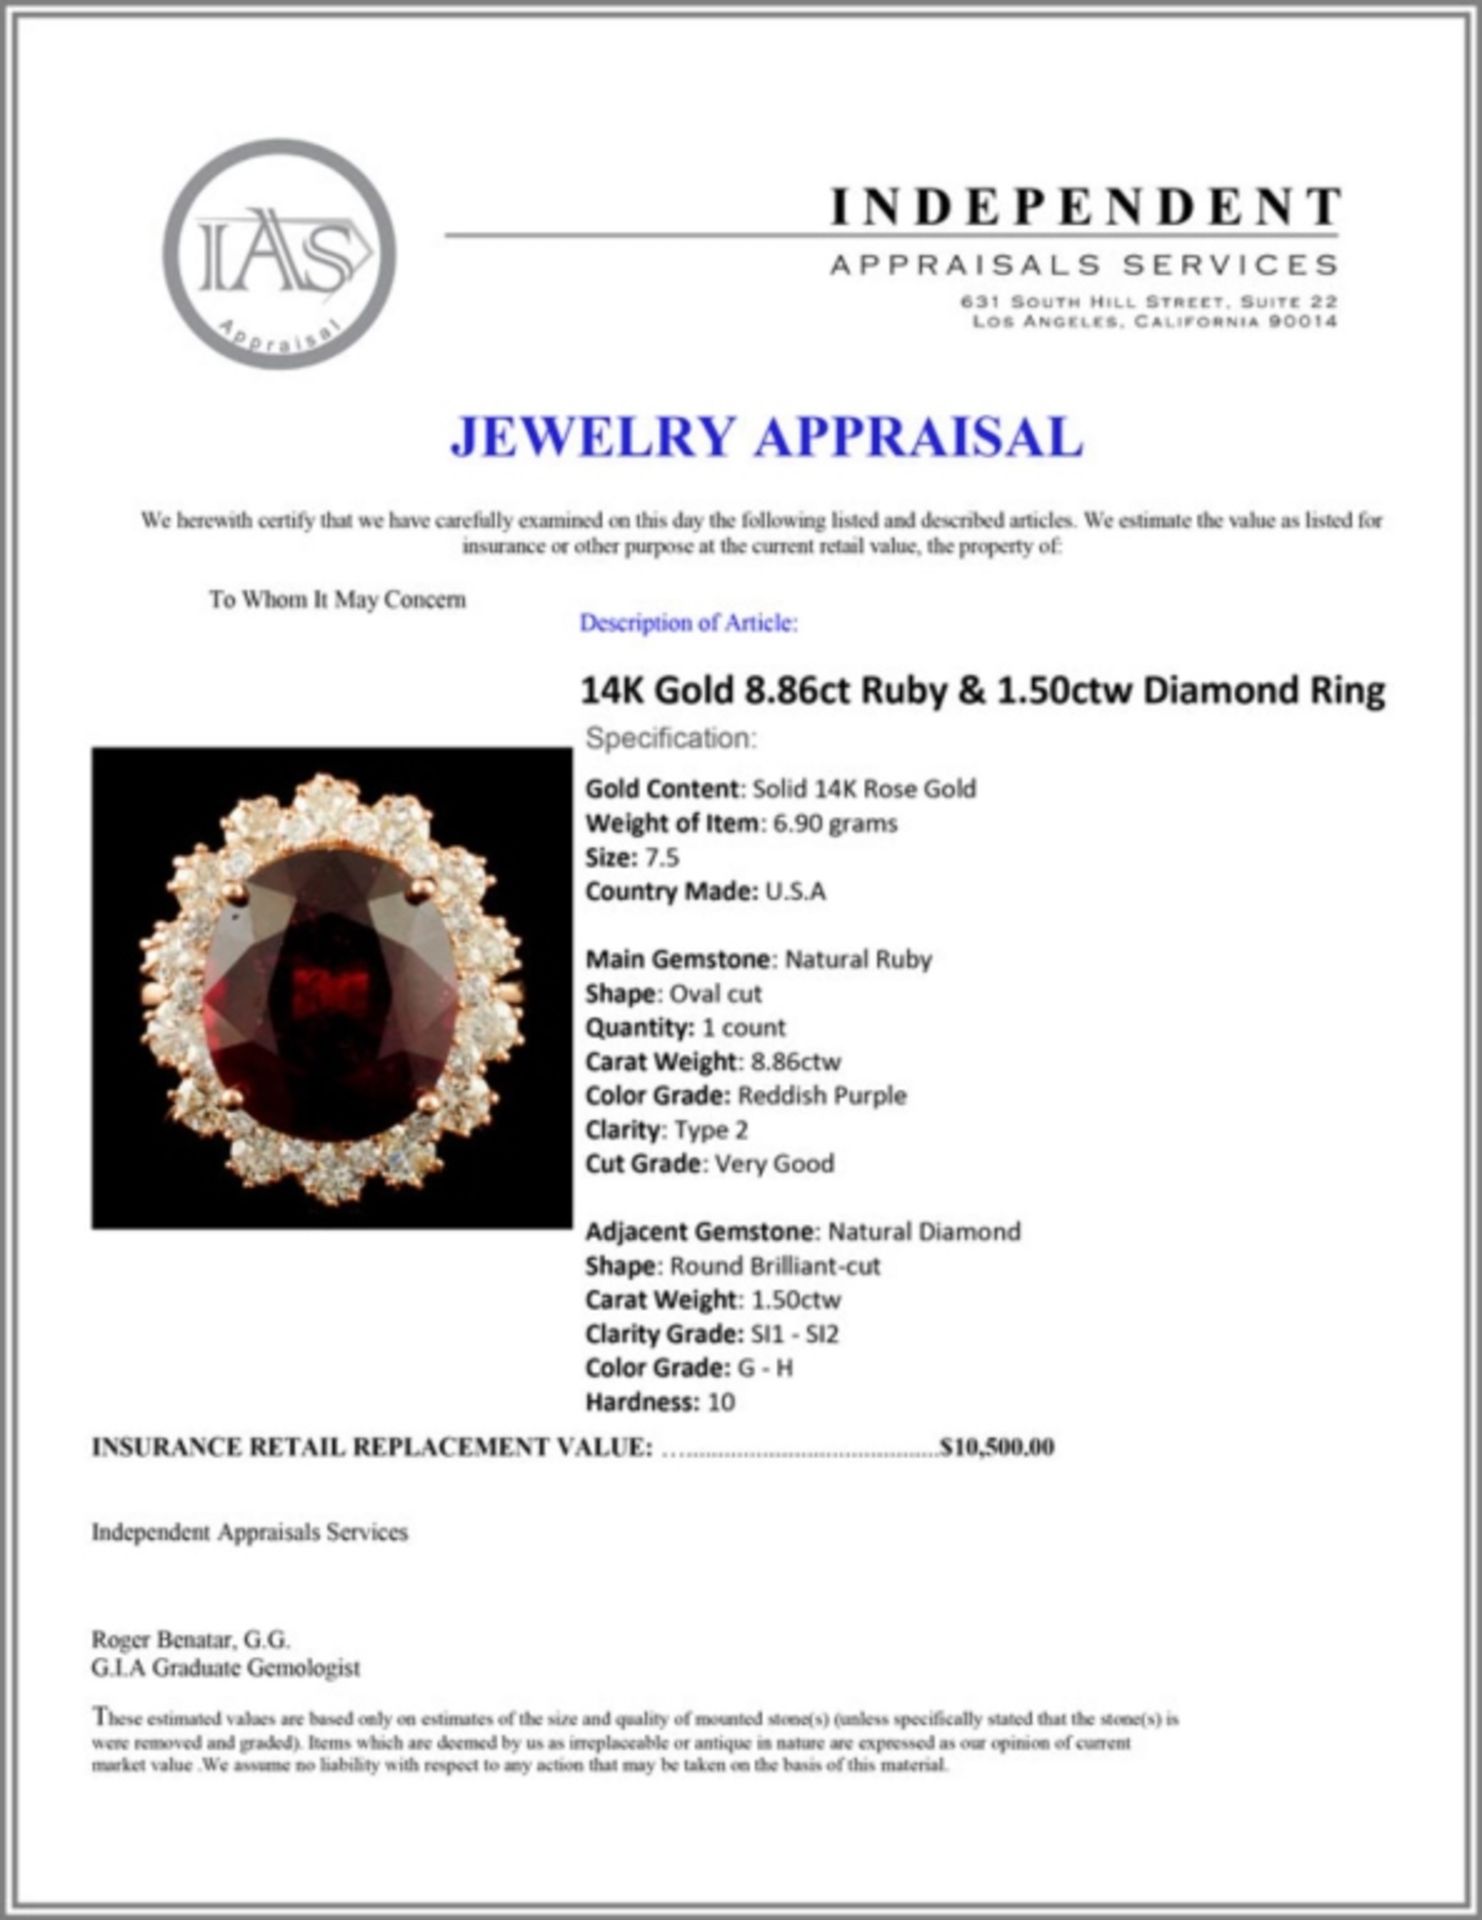 14K Gold 8.86ct Ruby & 1.50ctw Diamond Ring - Image 5 of 5